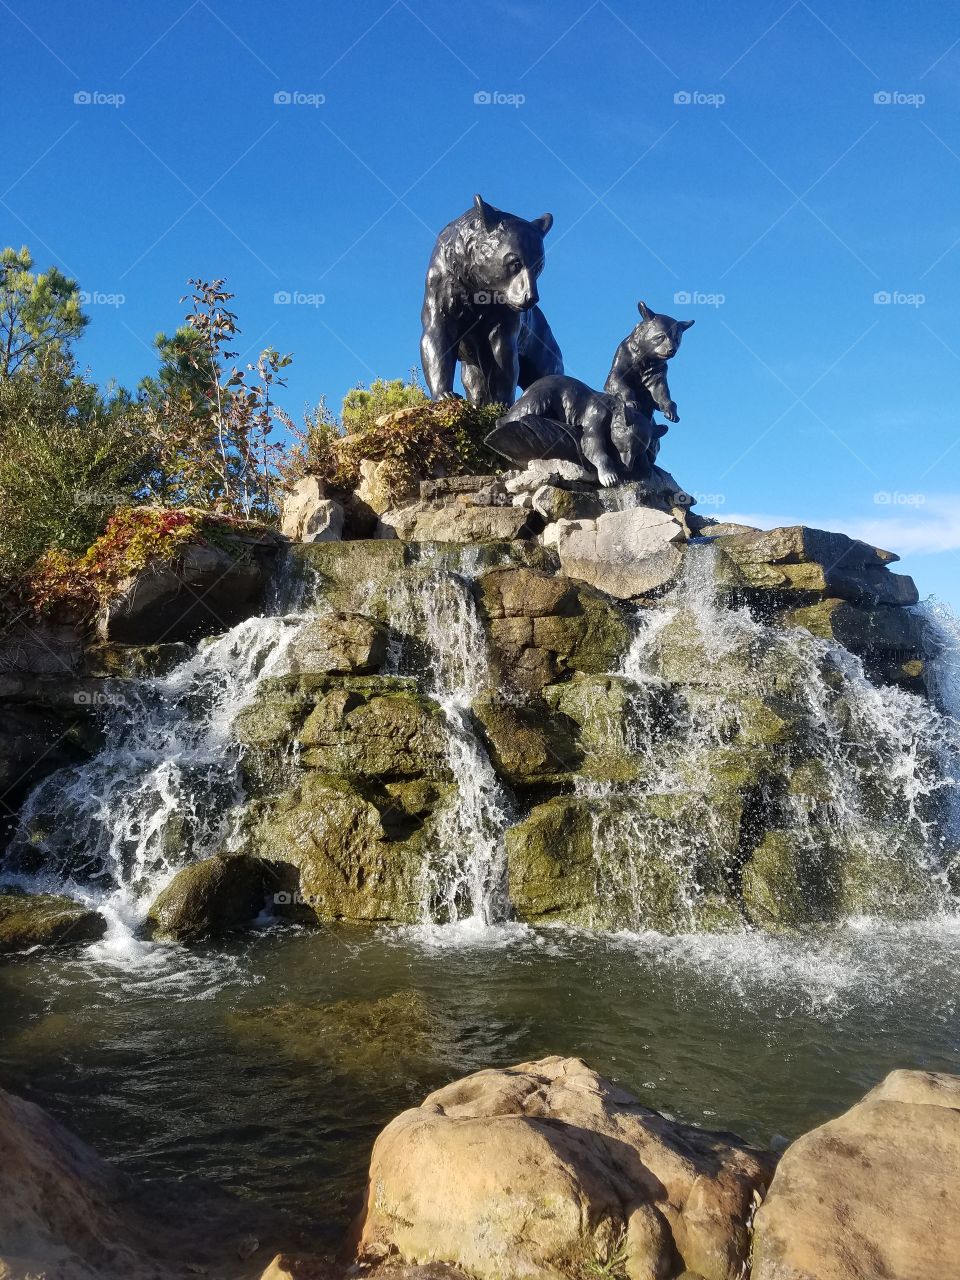 bear fountain